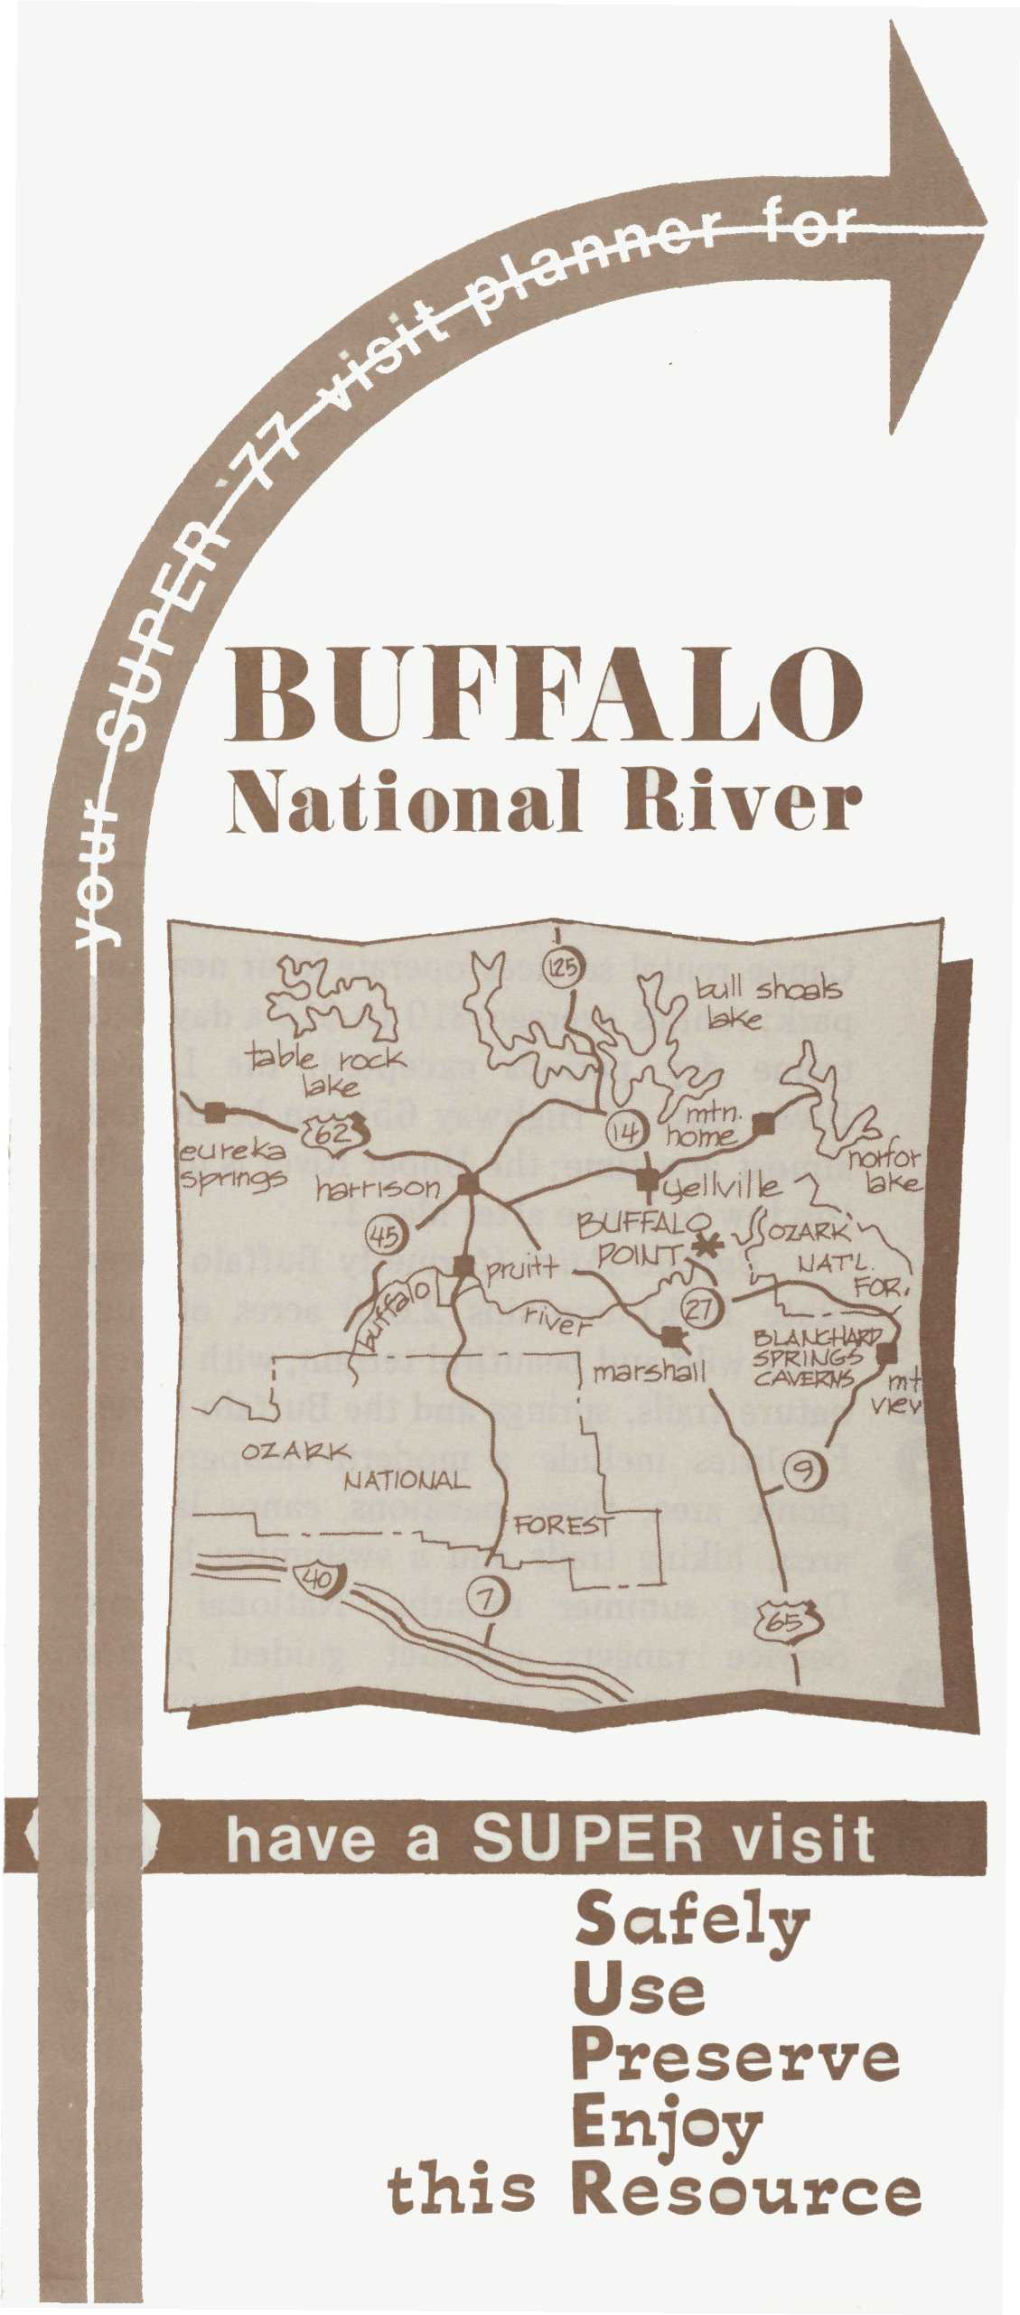 BUFFALO National River